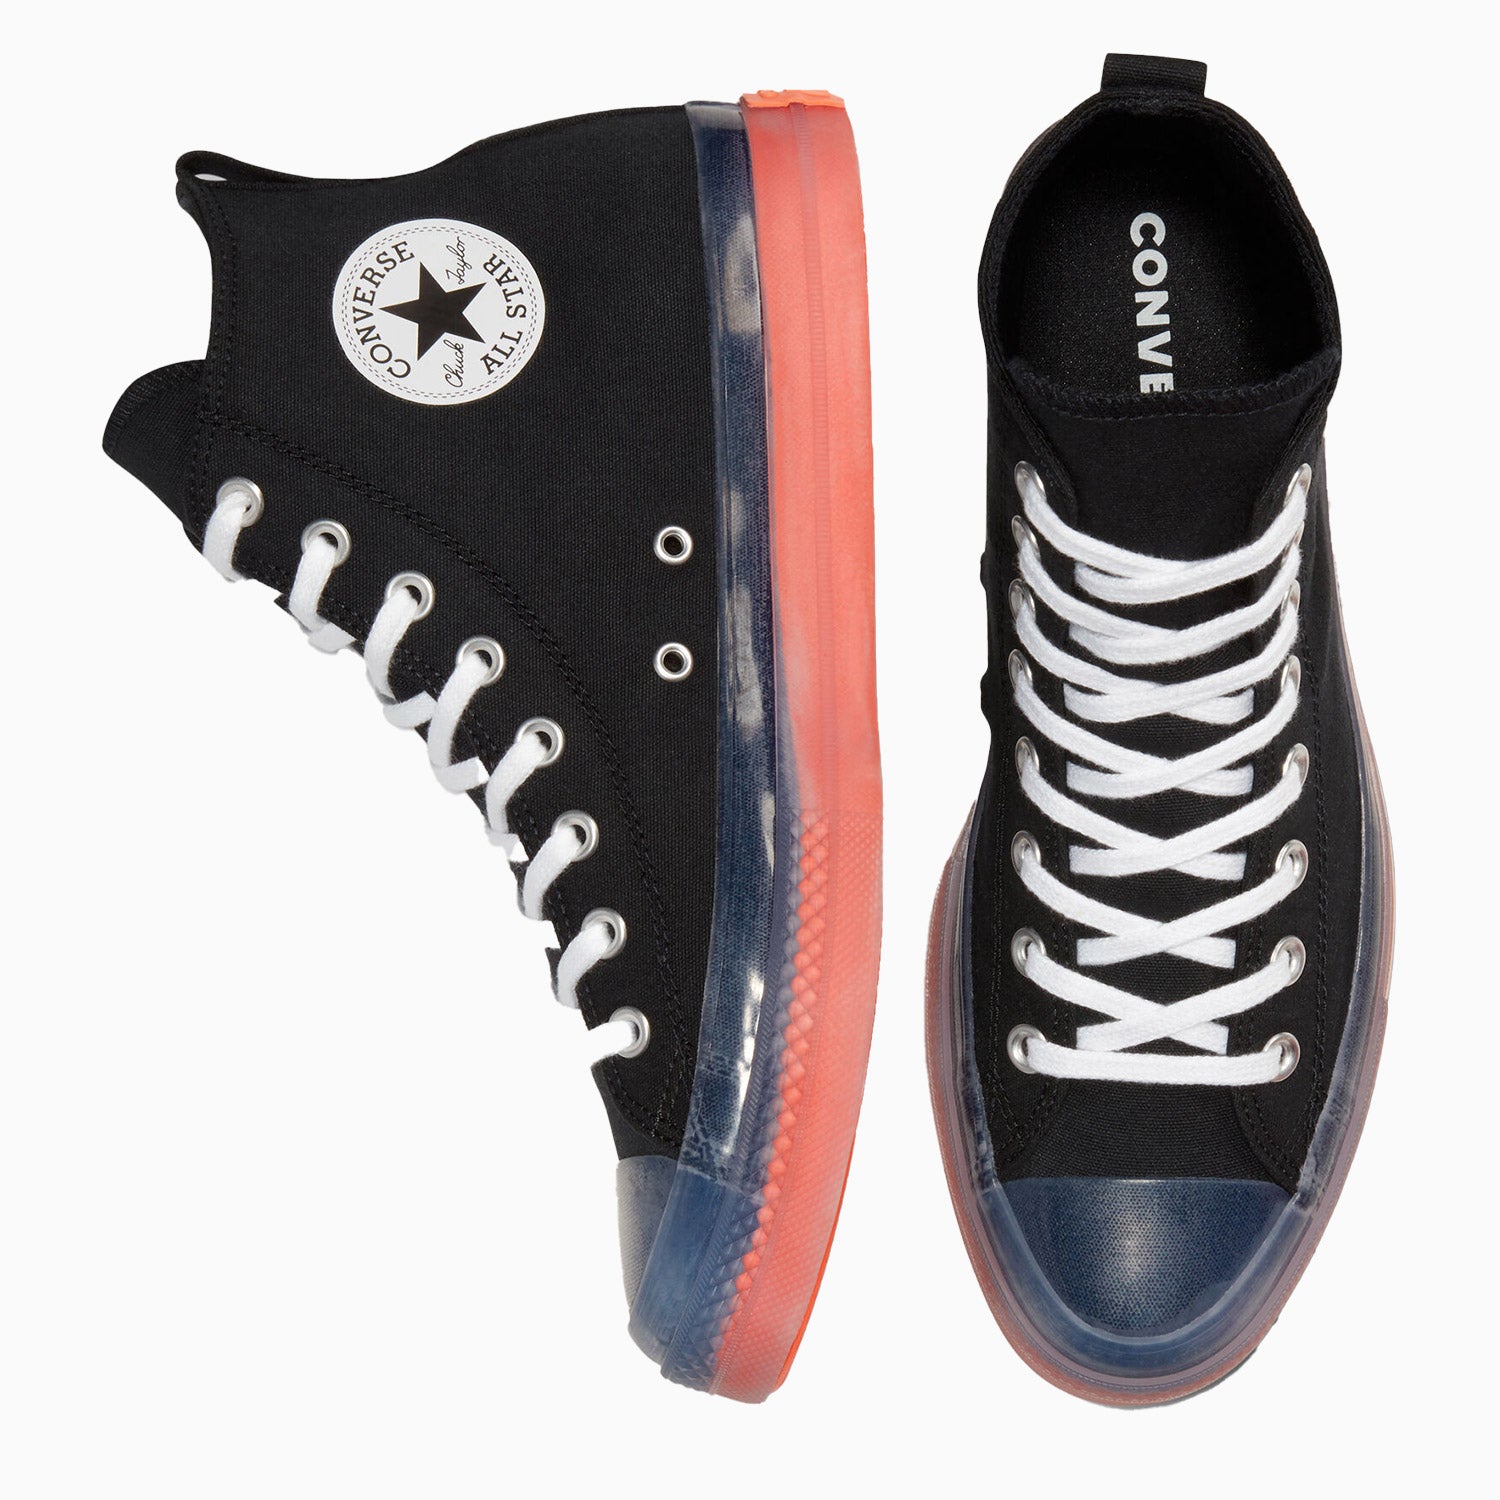 converse-kids-chuck-taylor-all-star-cx-high-grade-school-shoes-167809c-gs